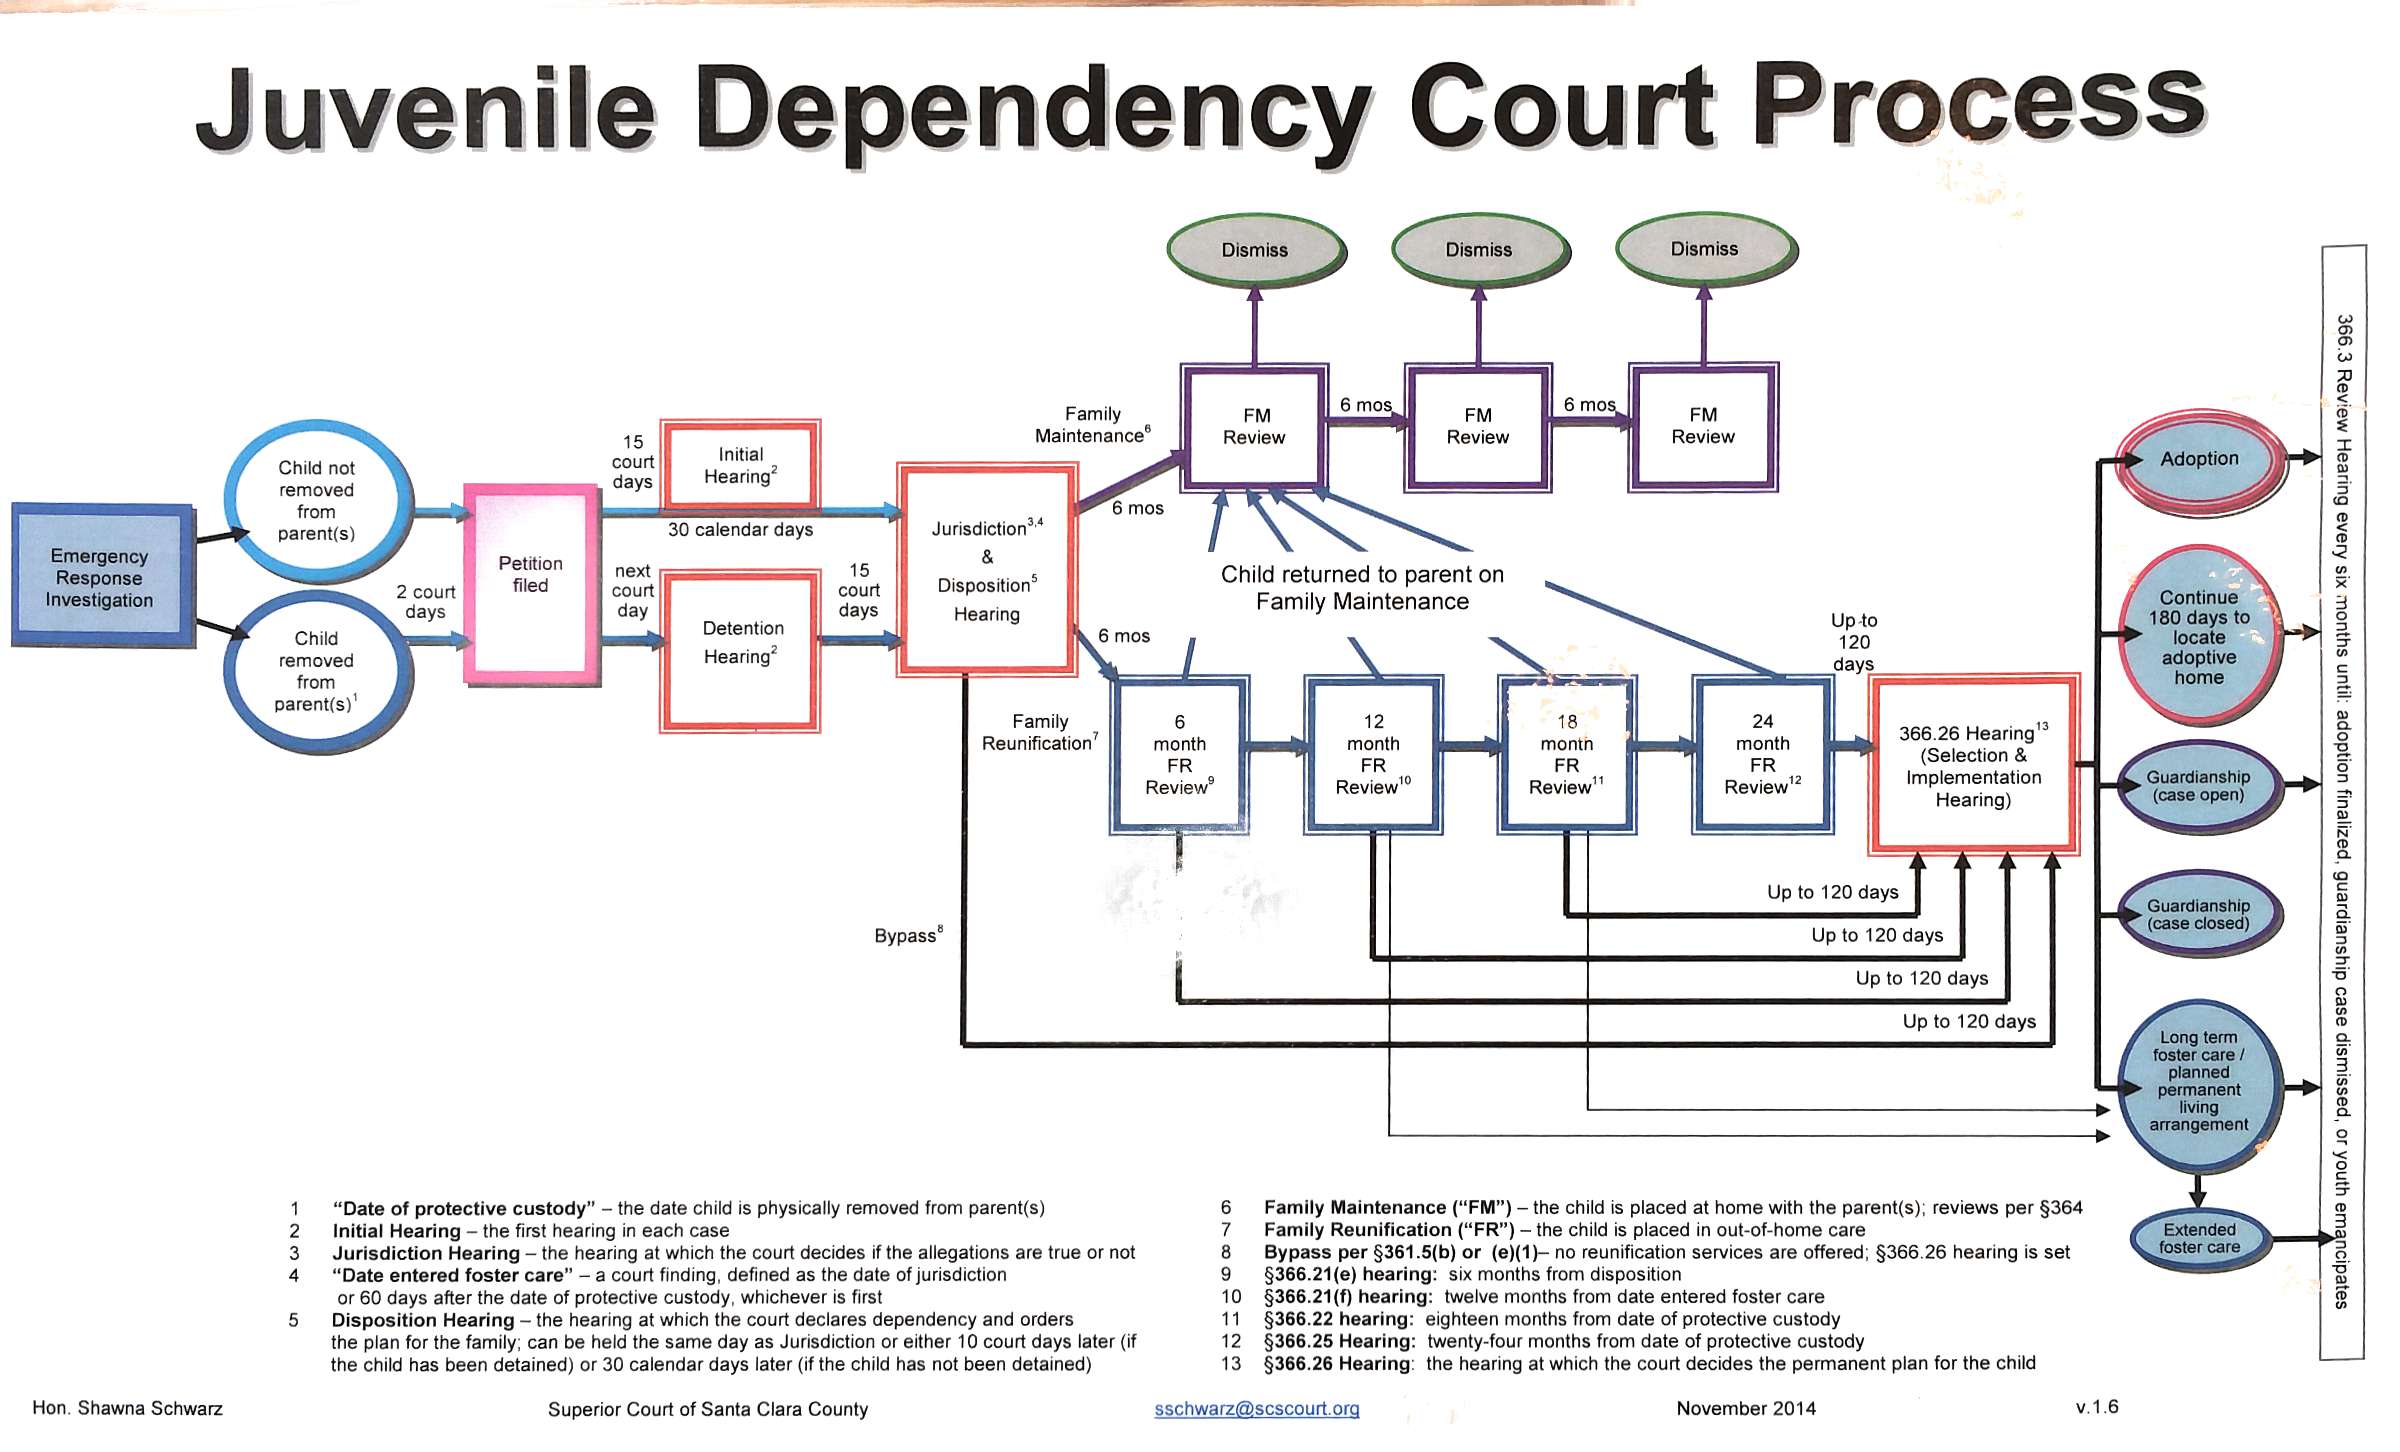 Juvenile Dependency Court image by Judge Shawna Schwarz